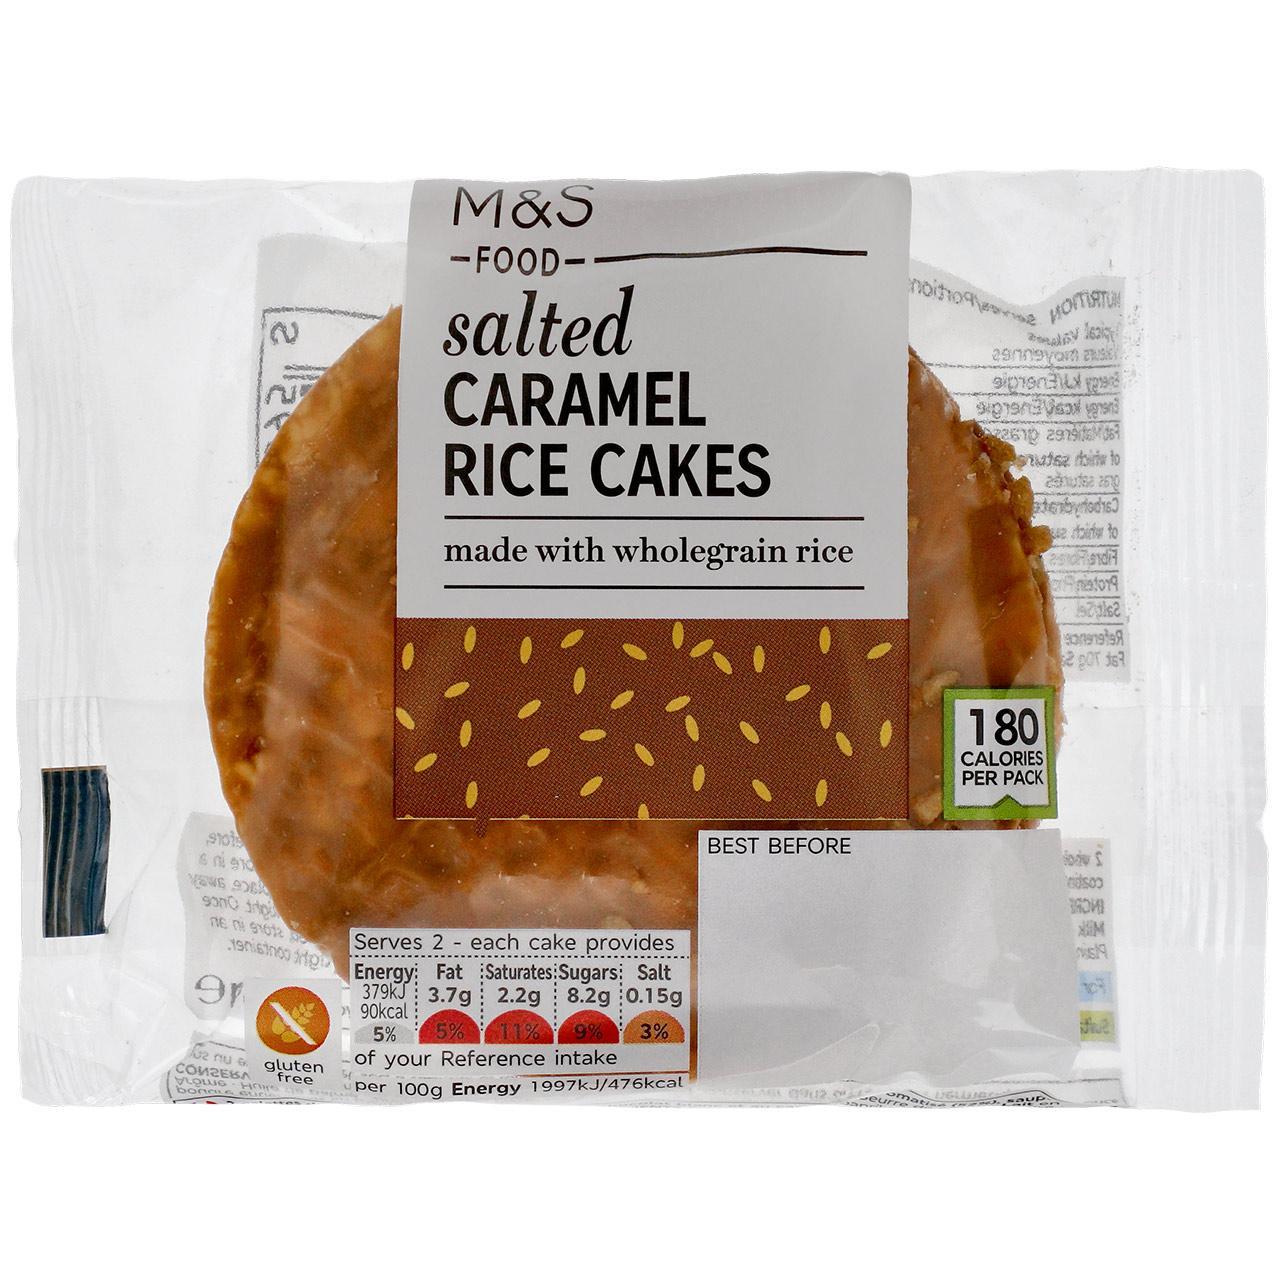 M&S Salted Caramel Rice Cakes